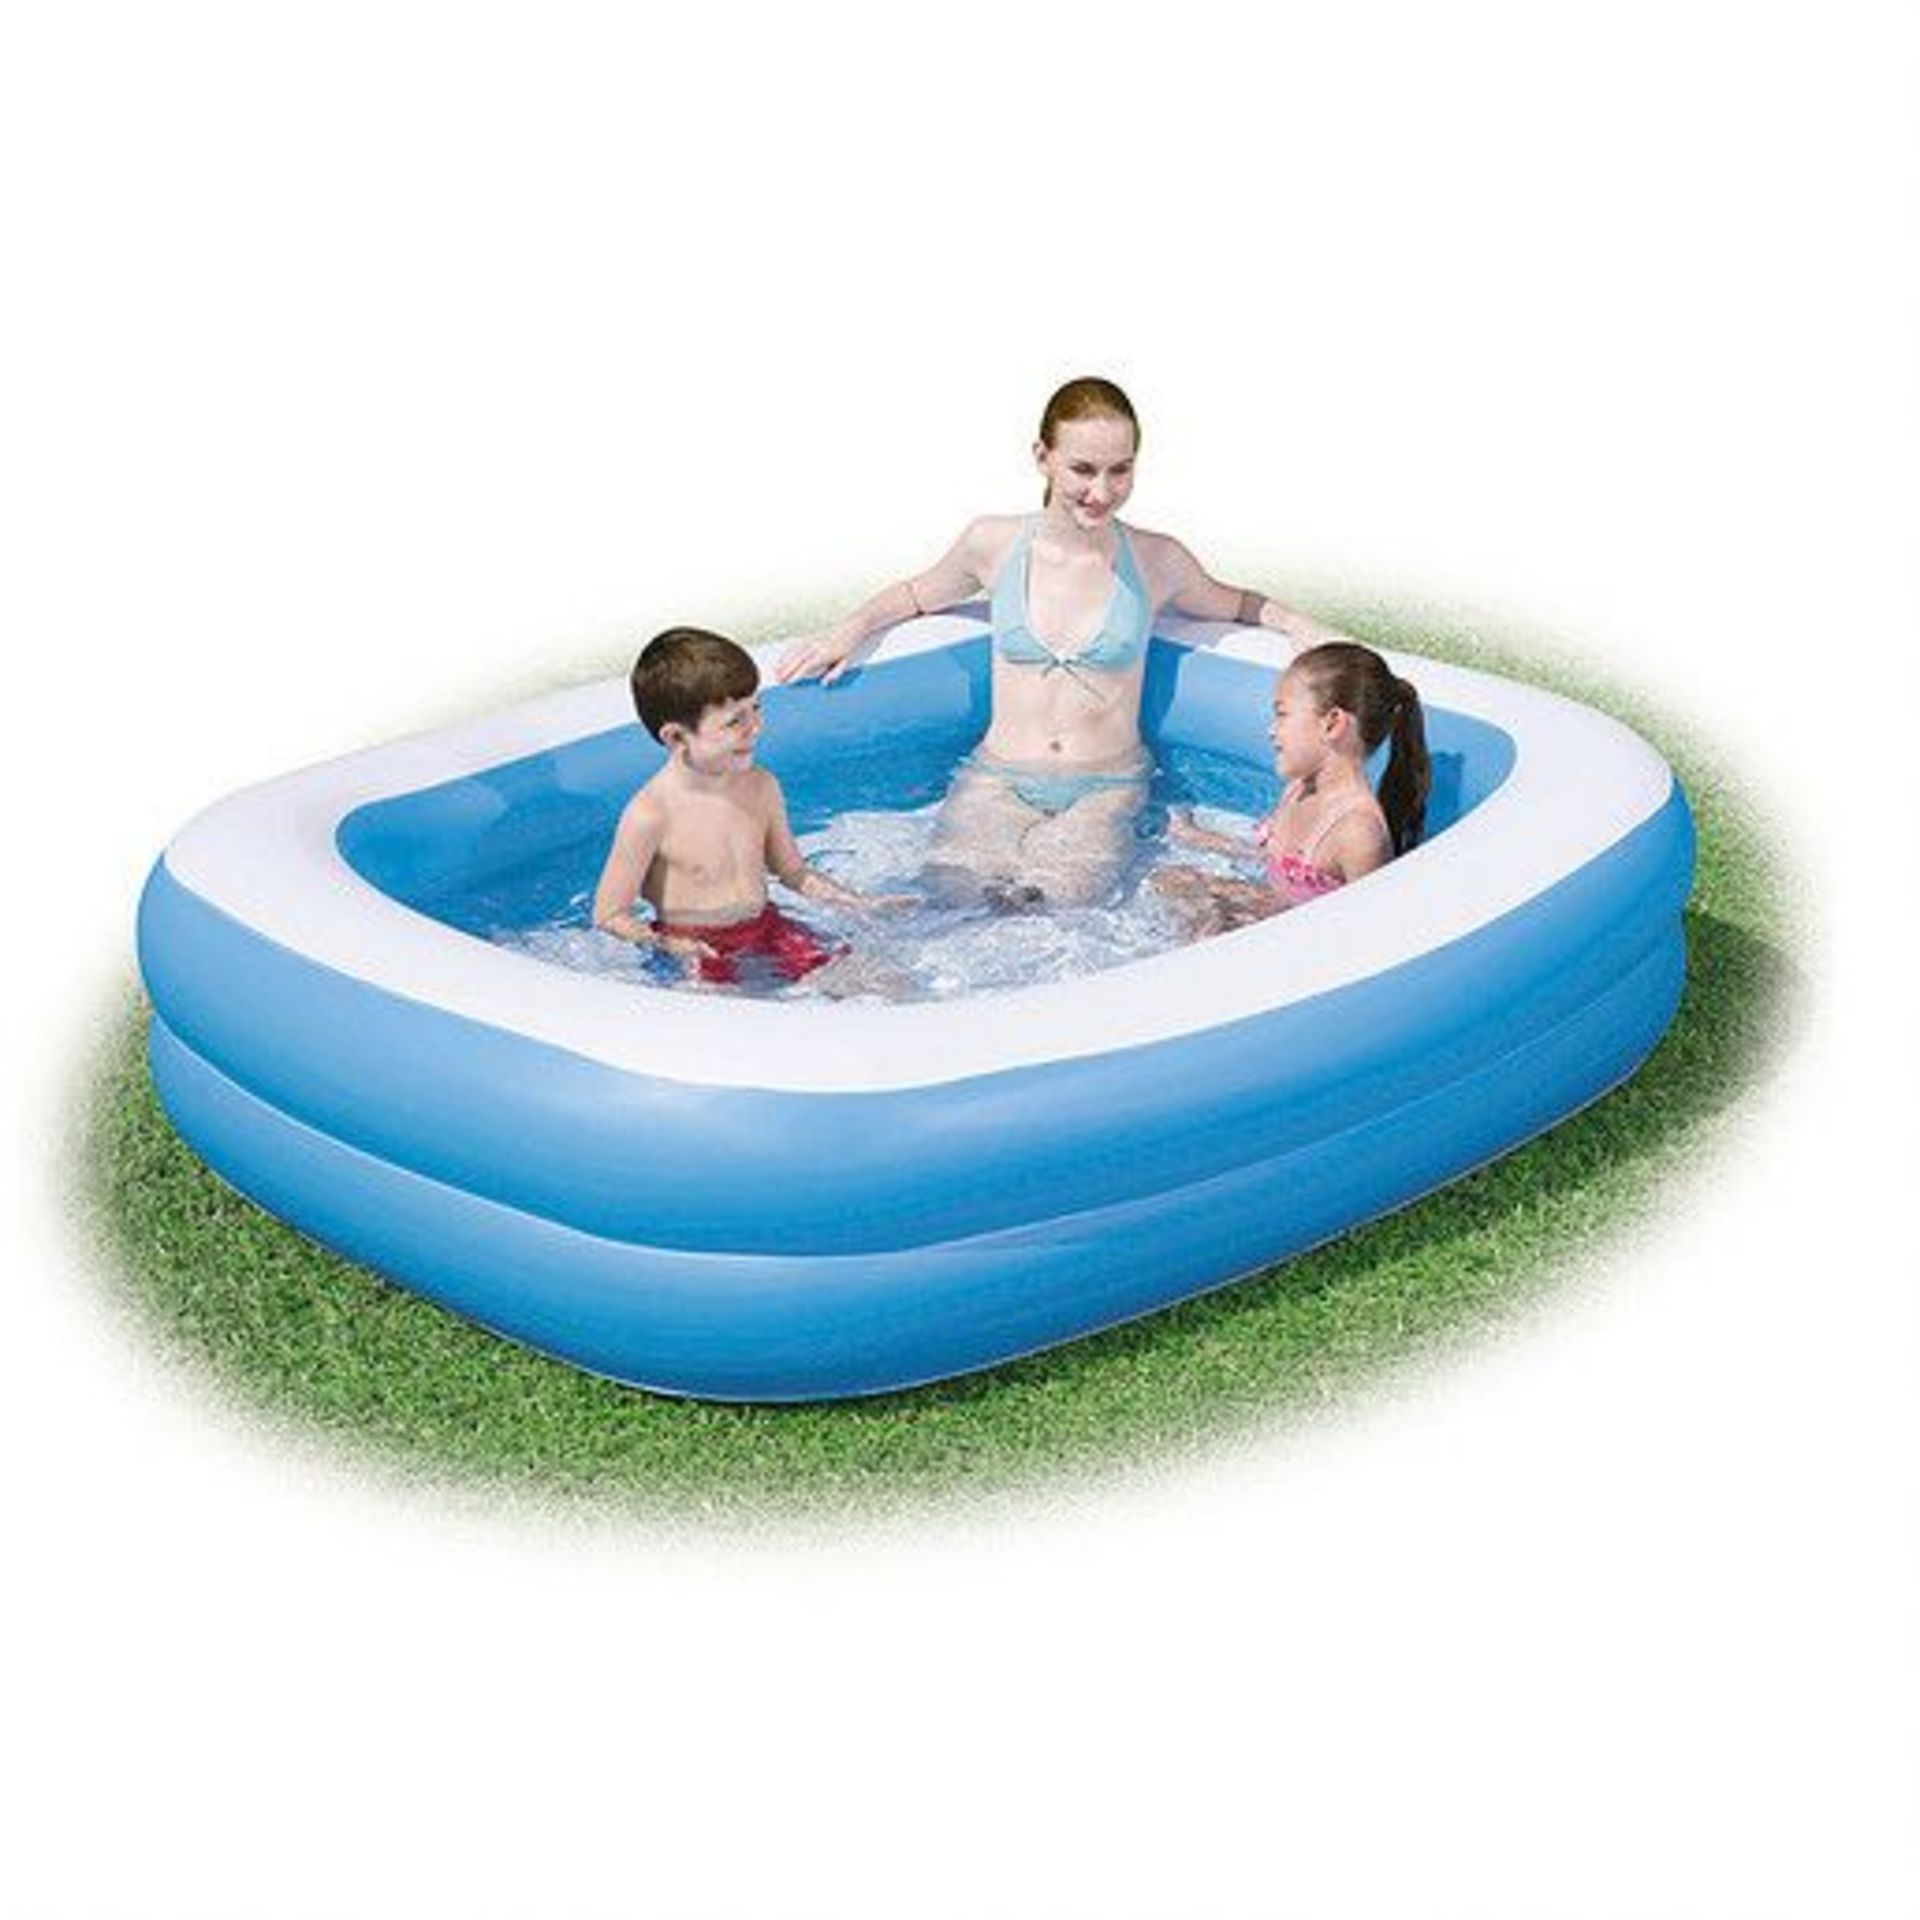 + VAT Brand New Large Family Blow-Up Pool (2.01m x 1.5m x 51cm) Tesco Direct Price £19.99